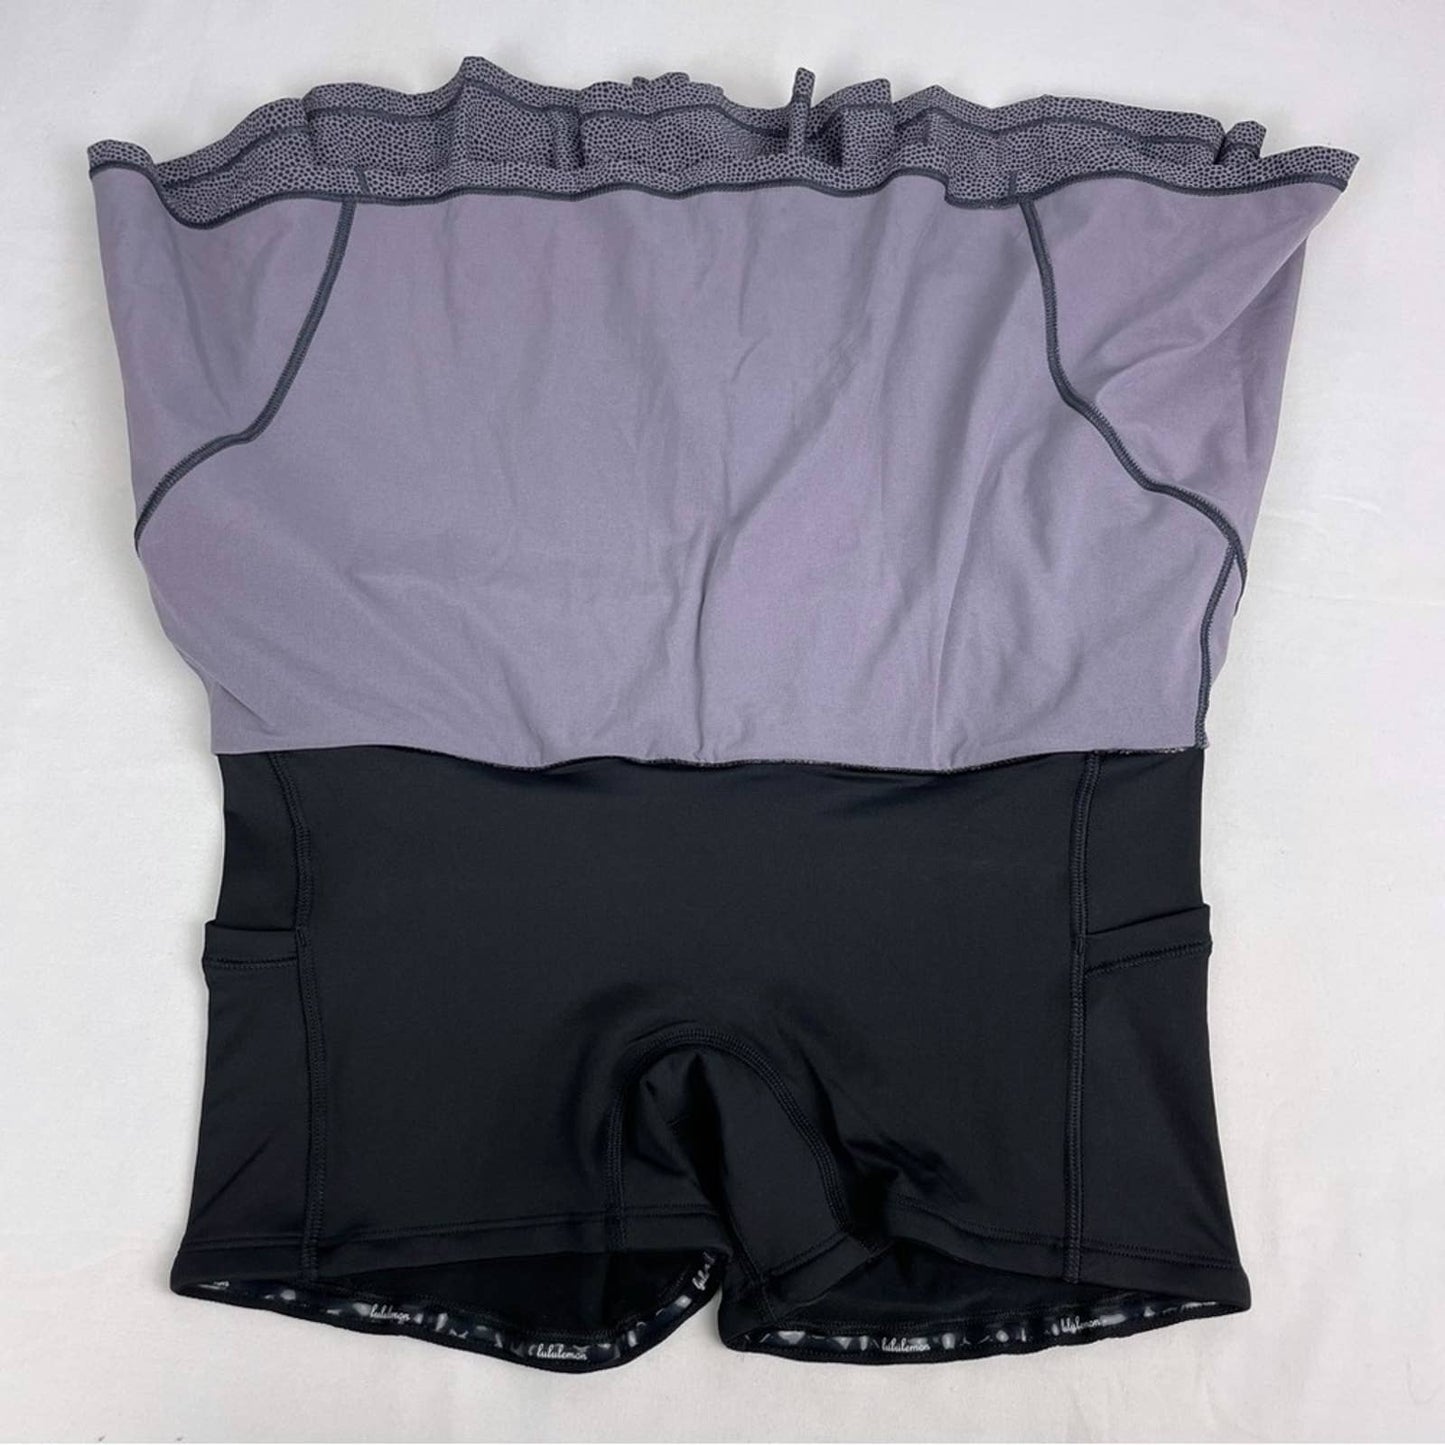 NEW Lululemon Tall Circuit Breaker II Disperse Dusky Lavender Active Skirt Skort Size 4